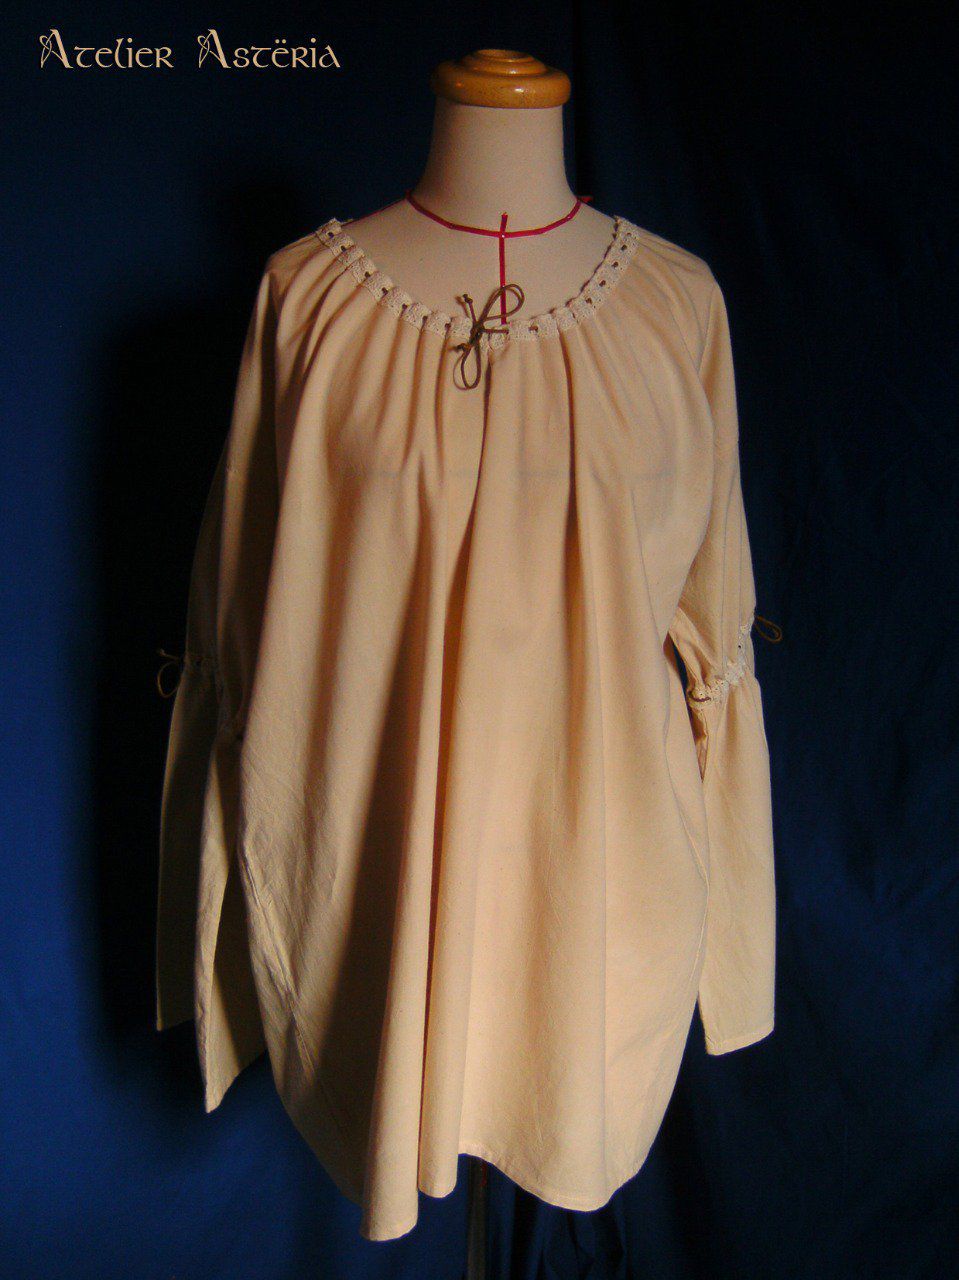 Chemise fantasy inspiration médiévale femme / Women's medieval-inspired fantasy shirt